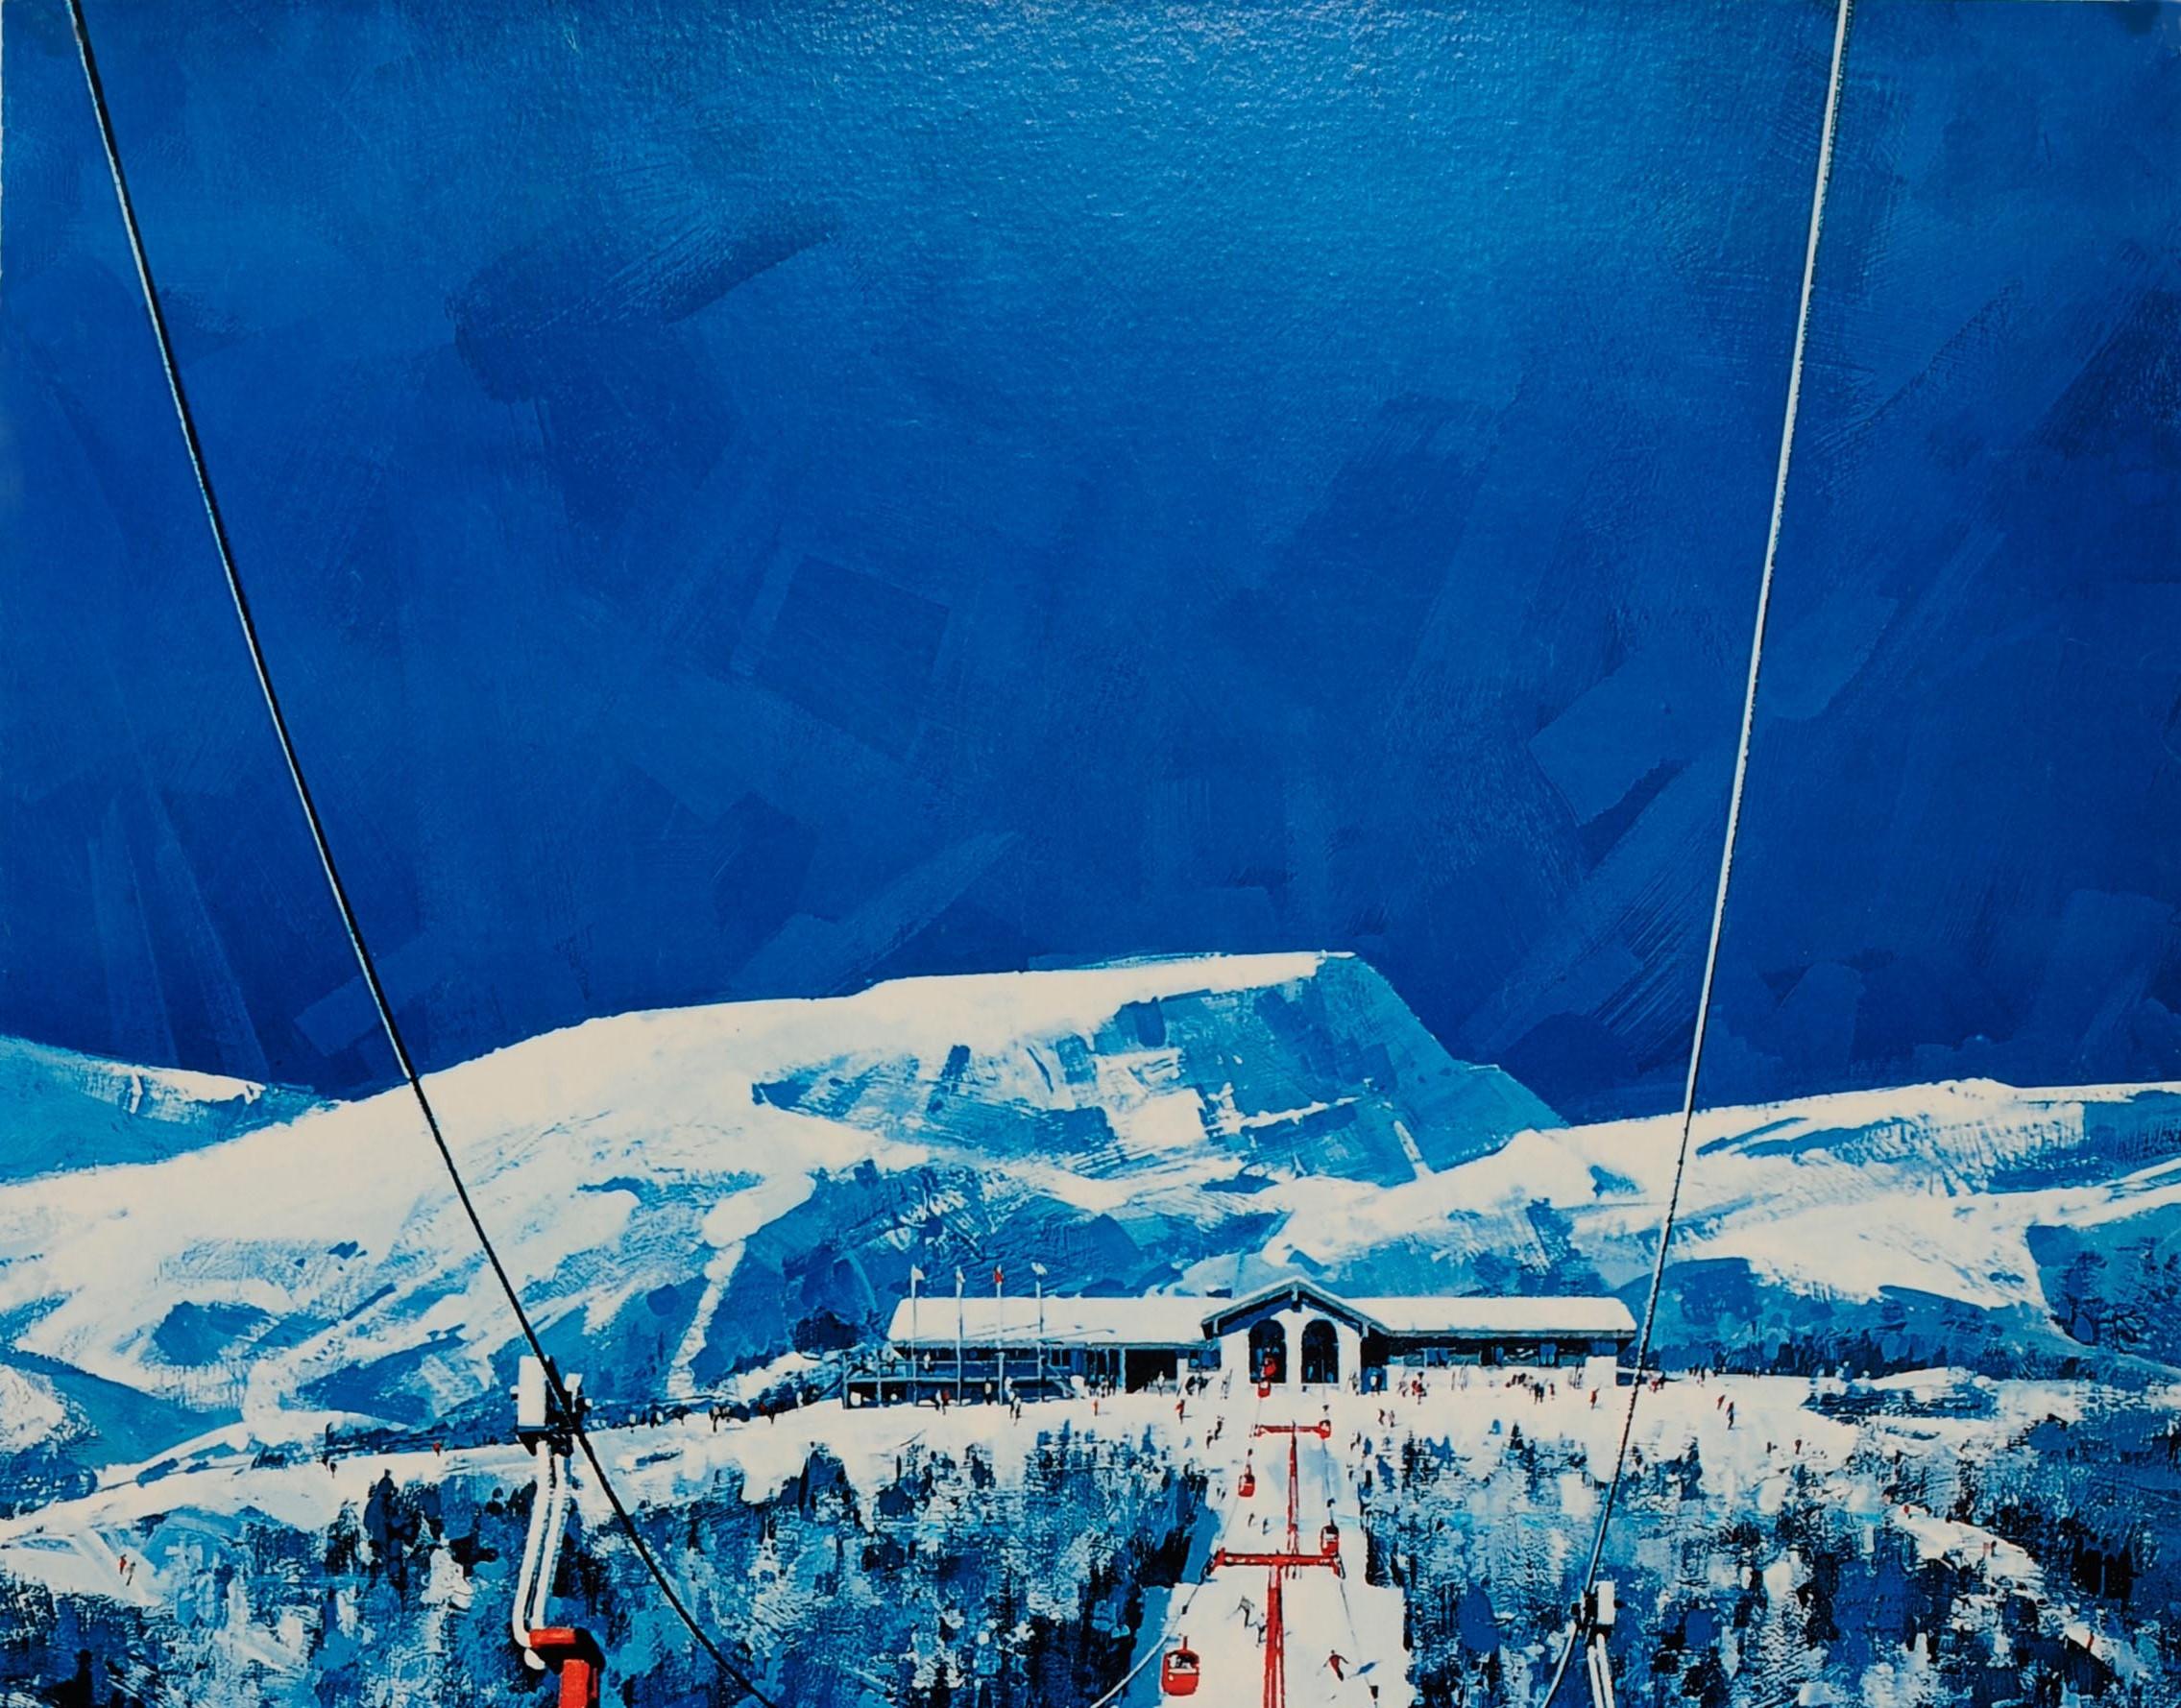 Original Vintage Skiing Poster Stowe Alpine Ski Resort Vermont Cable Car Ski Run - Print by Unknown